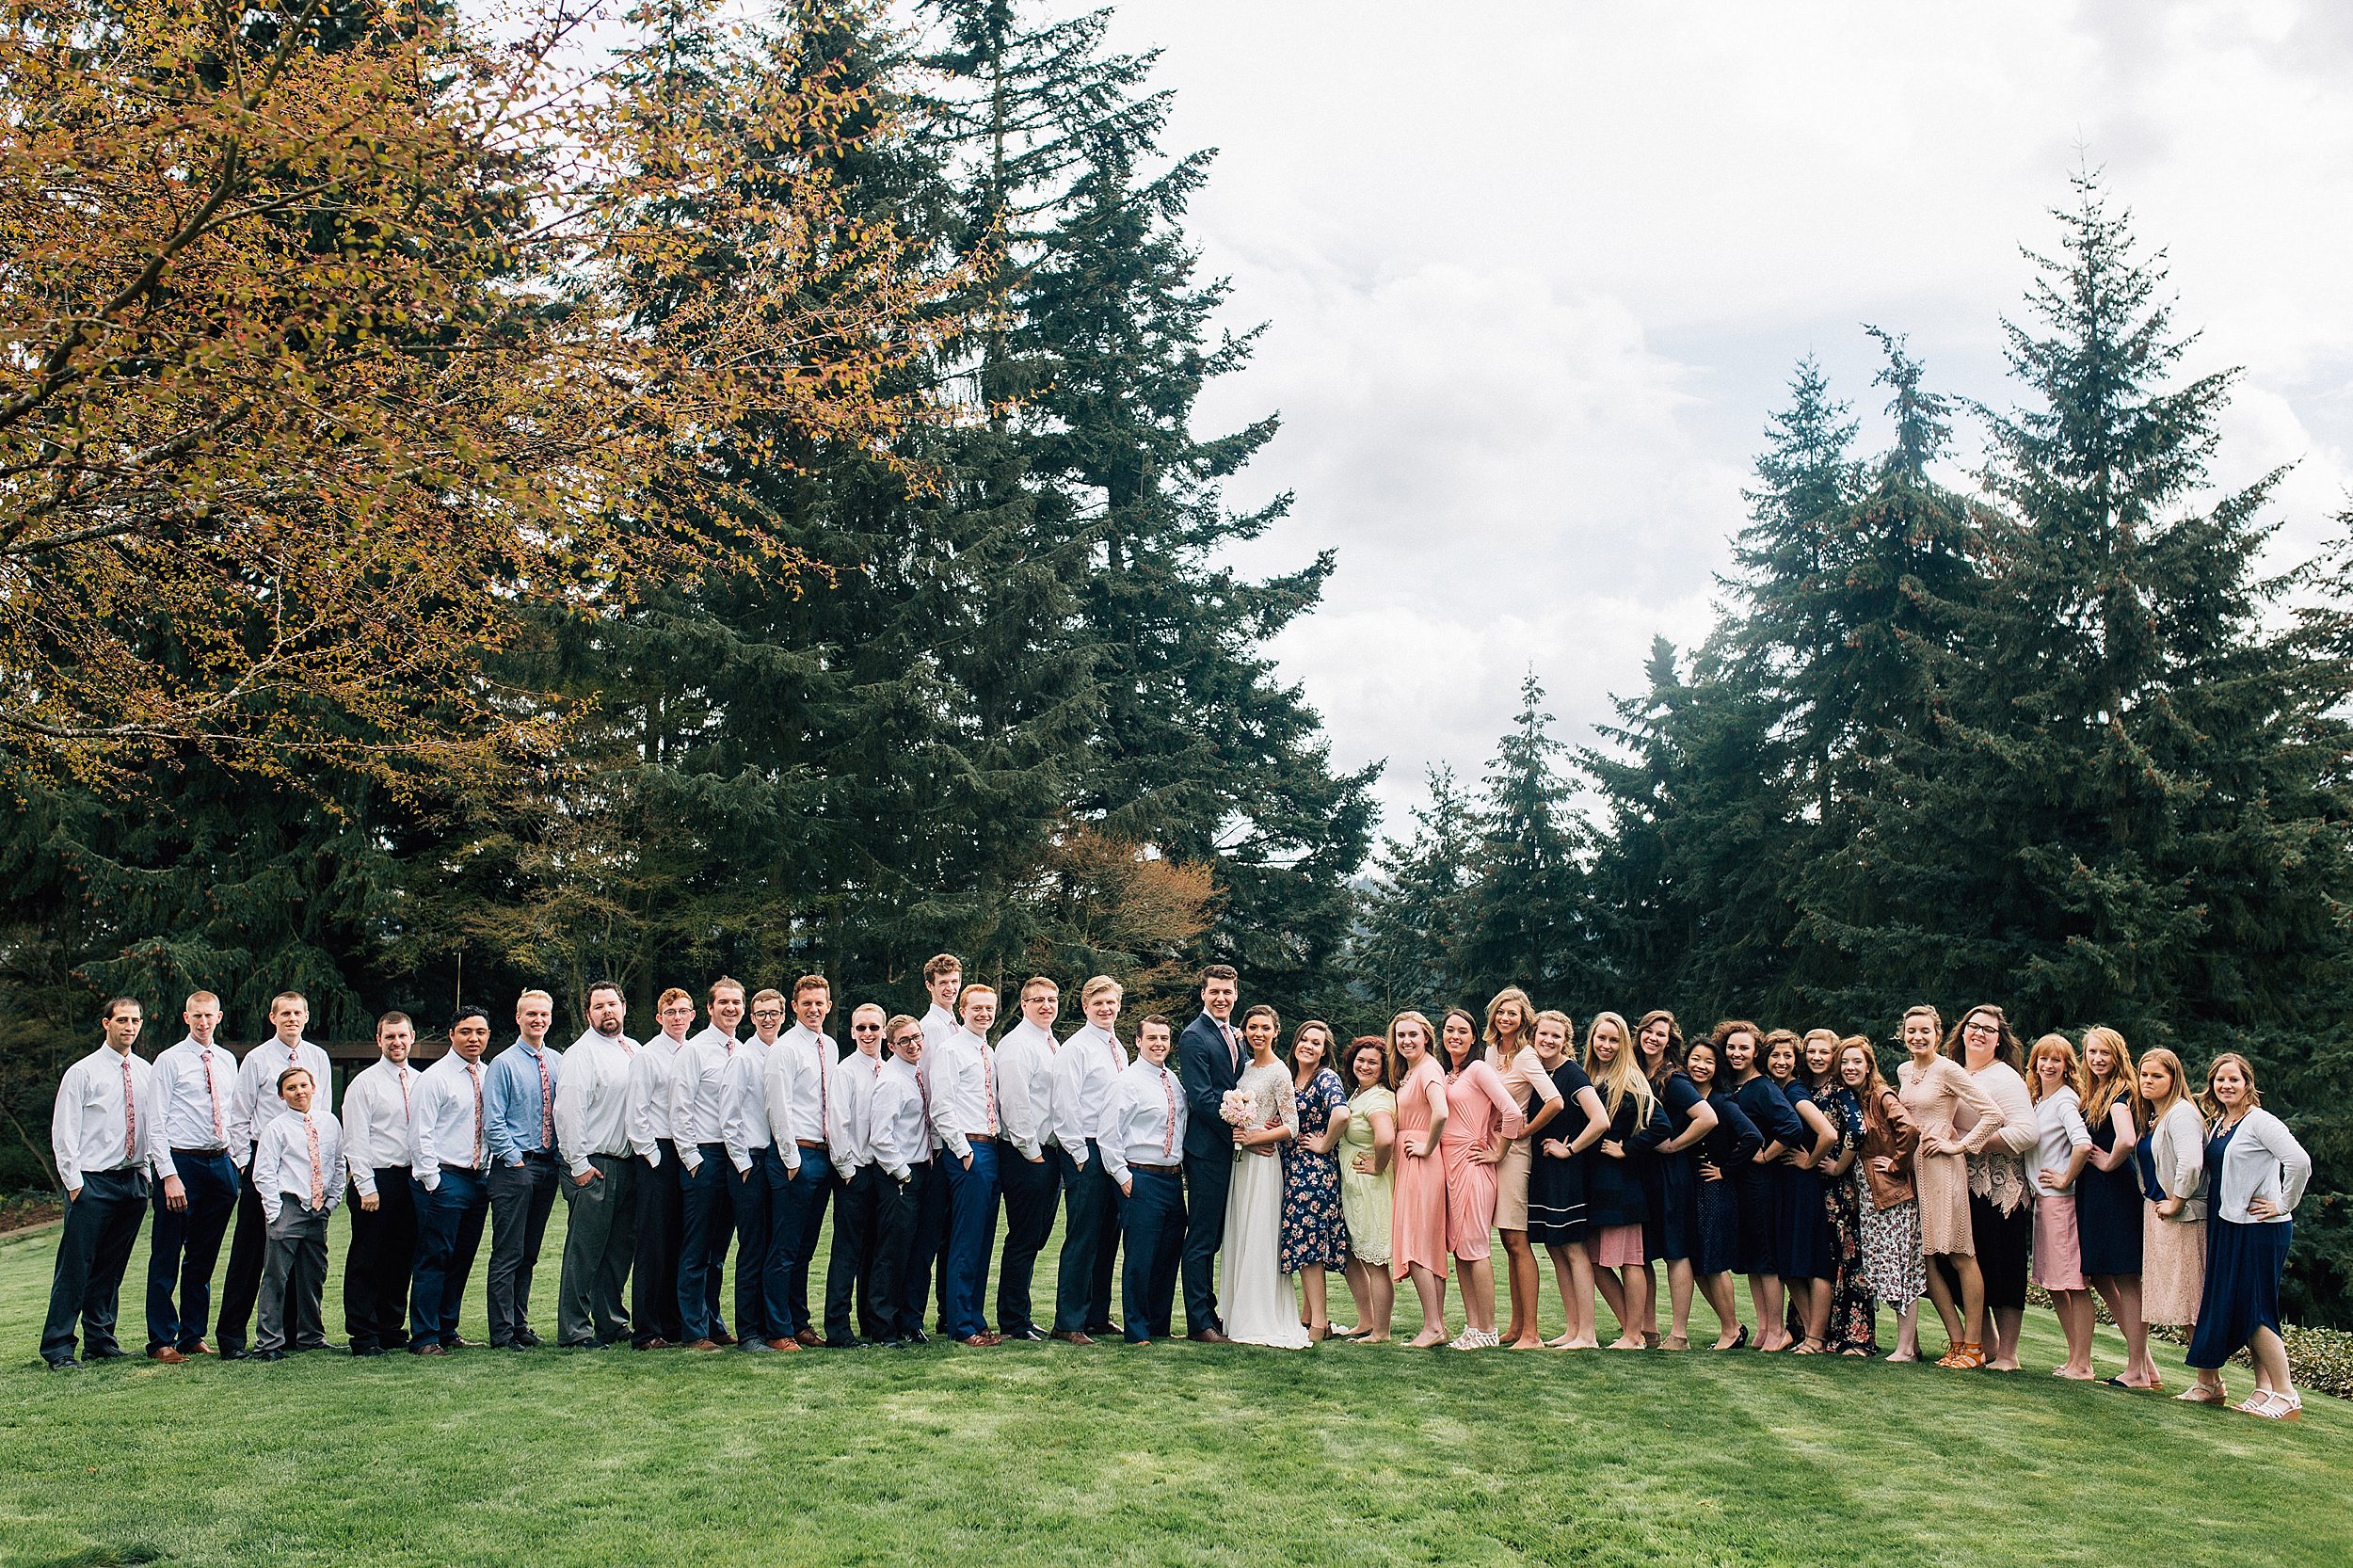 Seattle Washington Temple Wedding | LDS Wedding Photographer Seatlle2500 x 1666